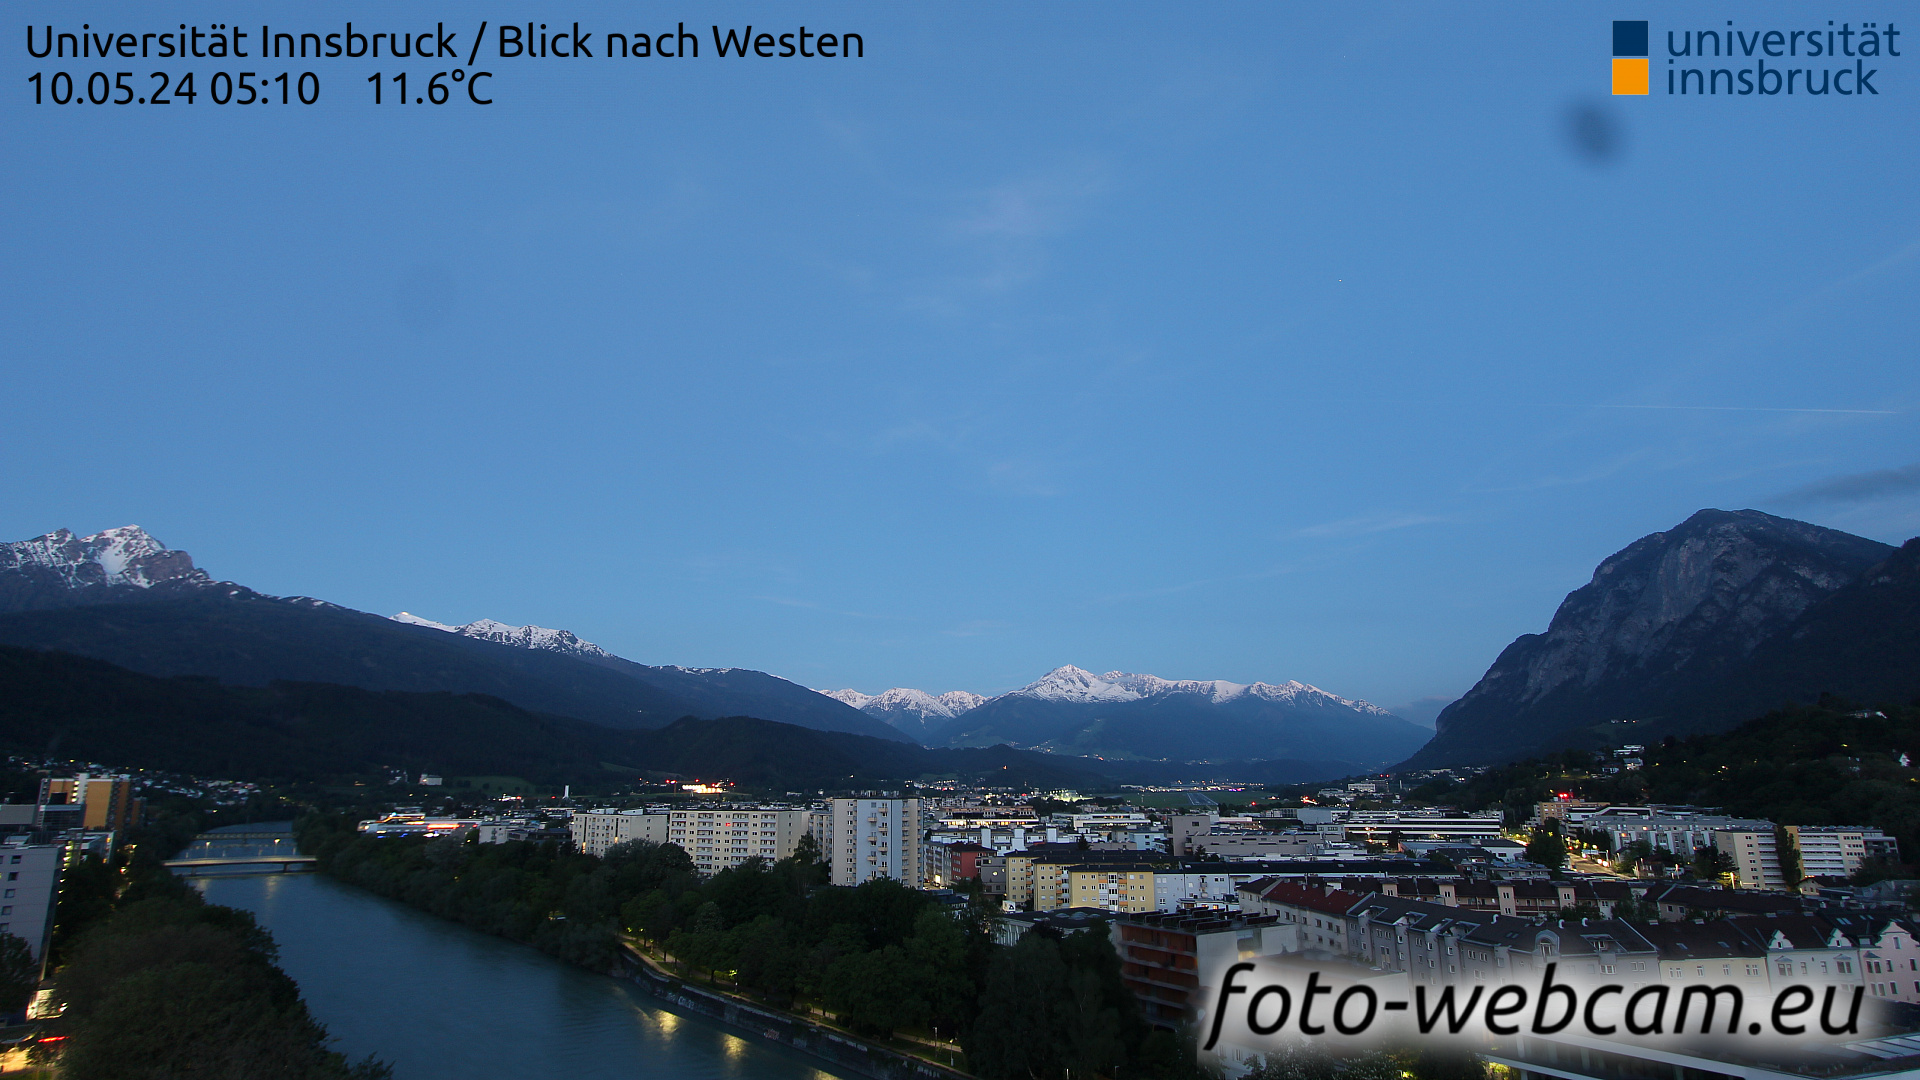 Innsbruck Man. 05:17